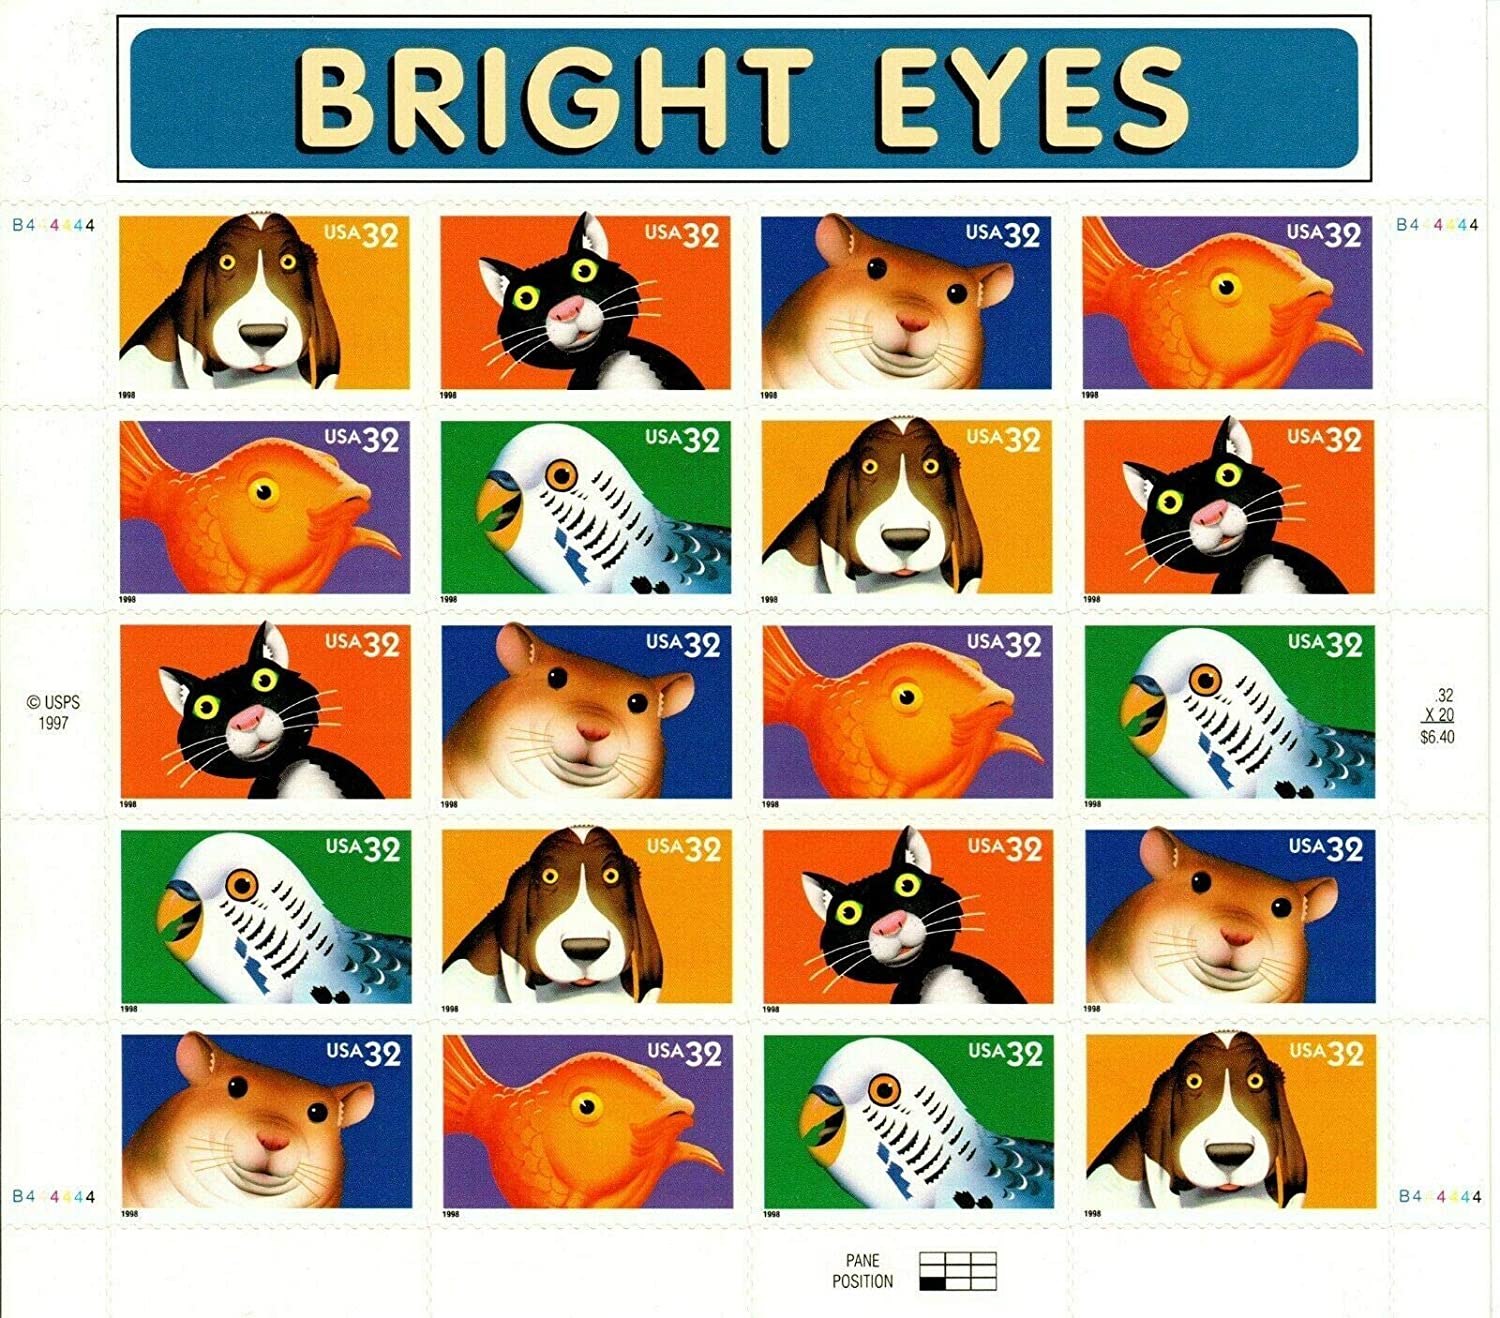 Twenty pets 'star' on Forever postage stamps